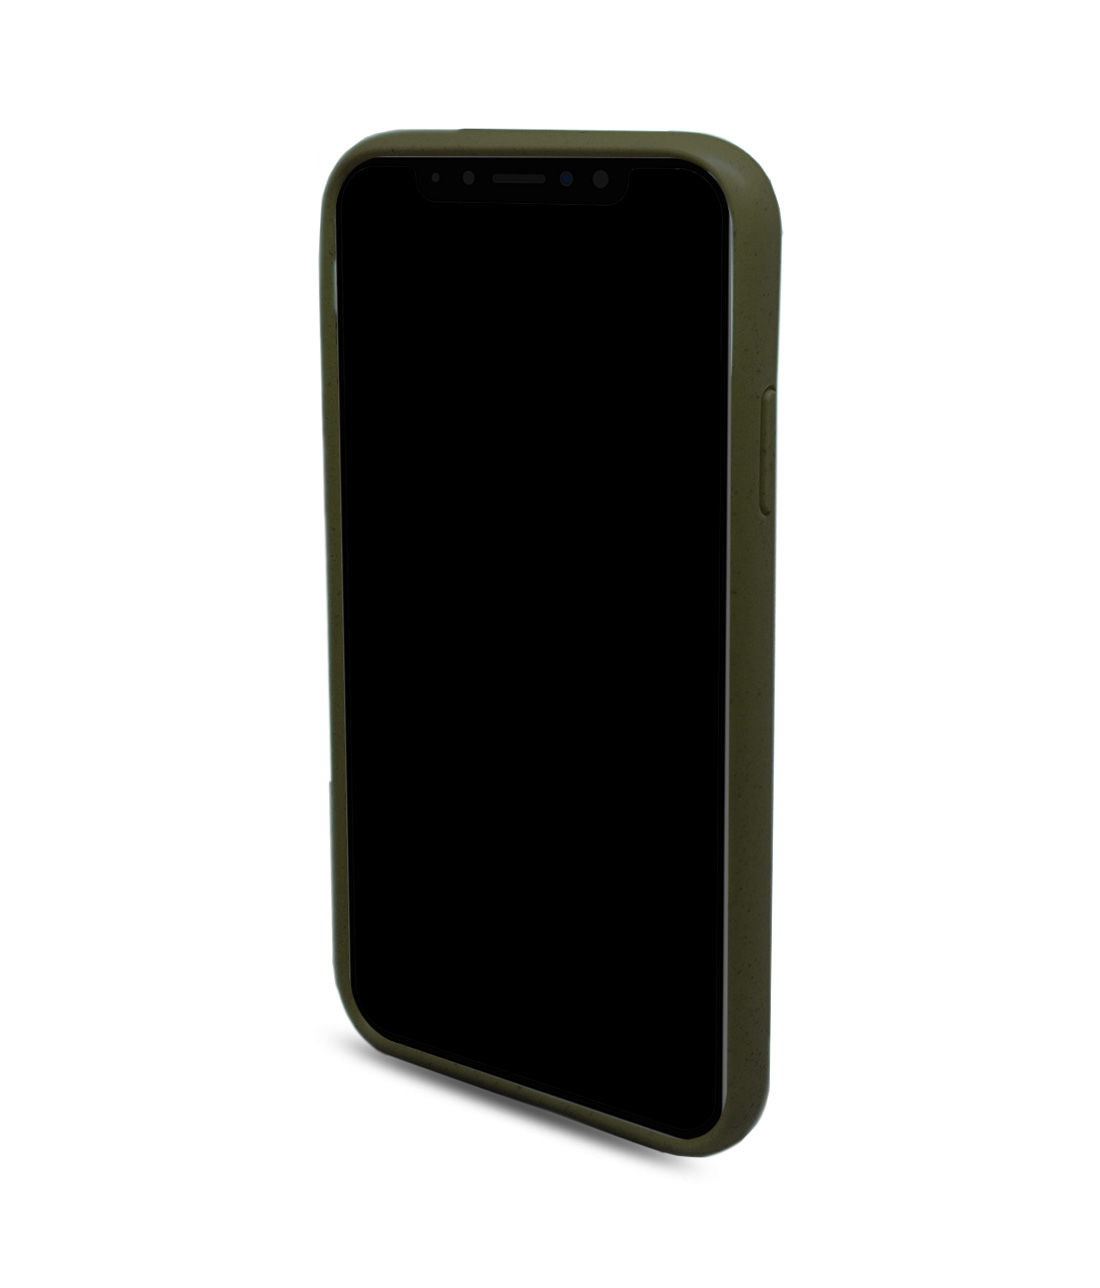 Buy Camo Black Macmerise Sleek Case for iPhone 11 Online